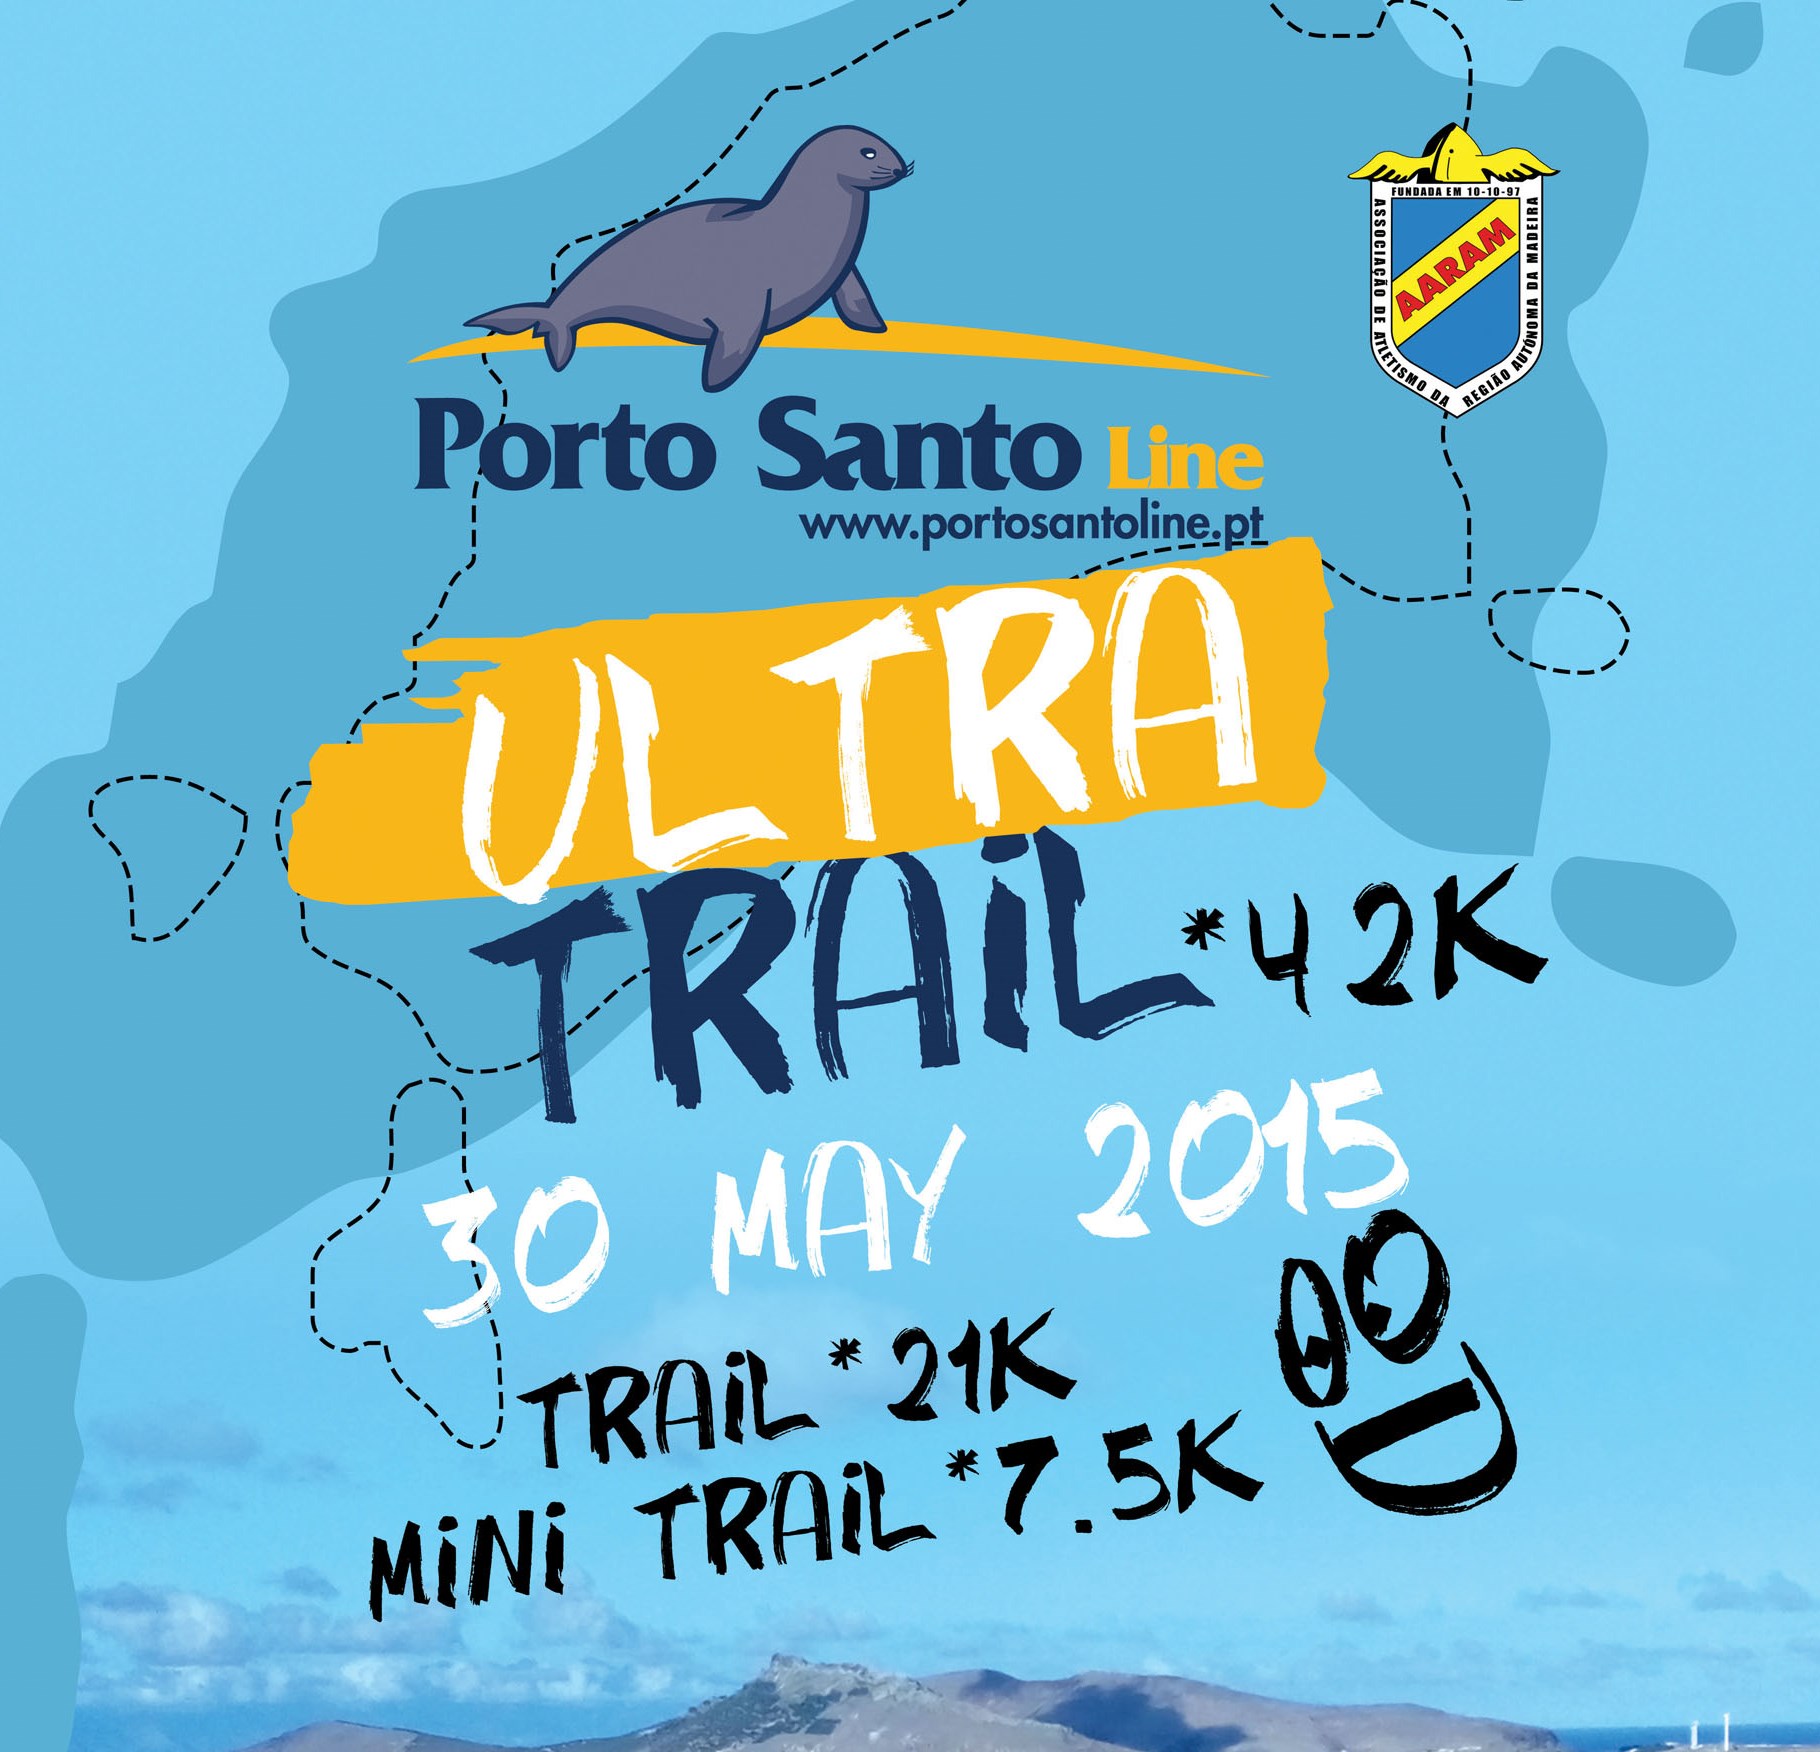 Ultra Trail do Porto Santo 2015